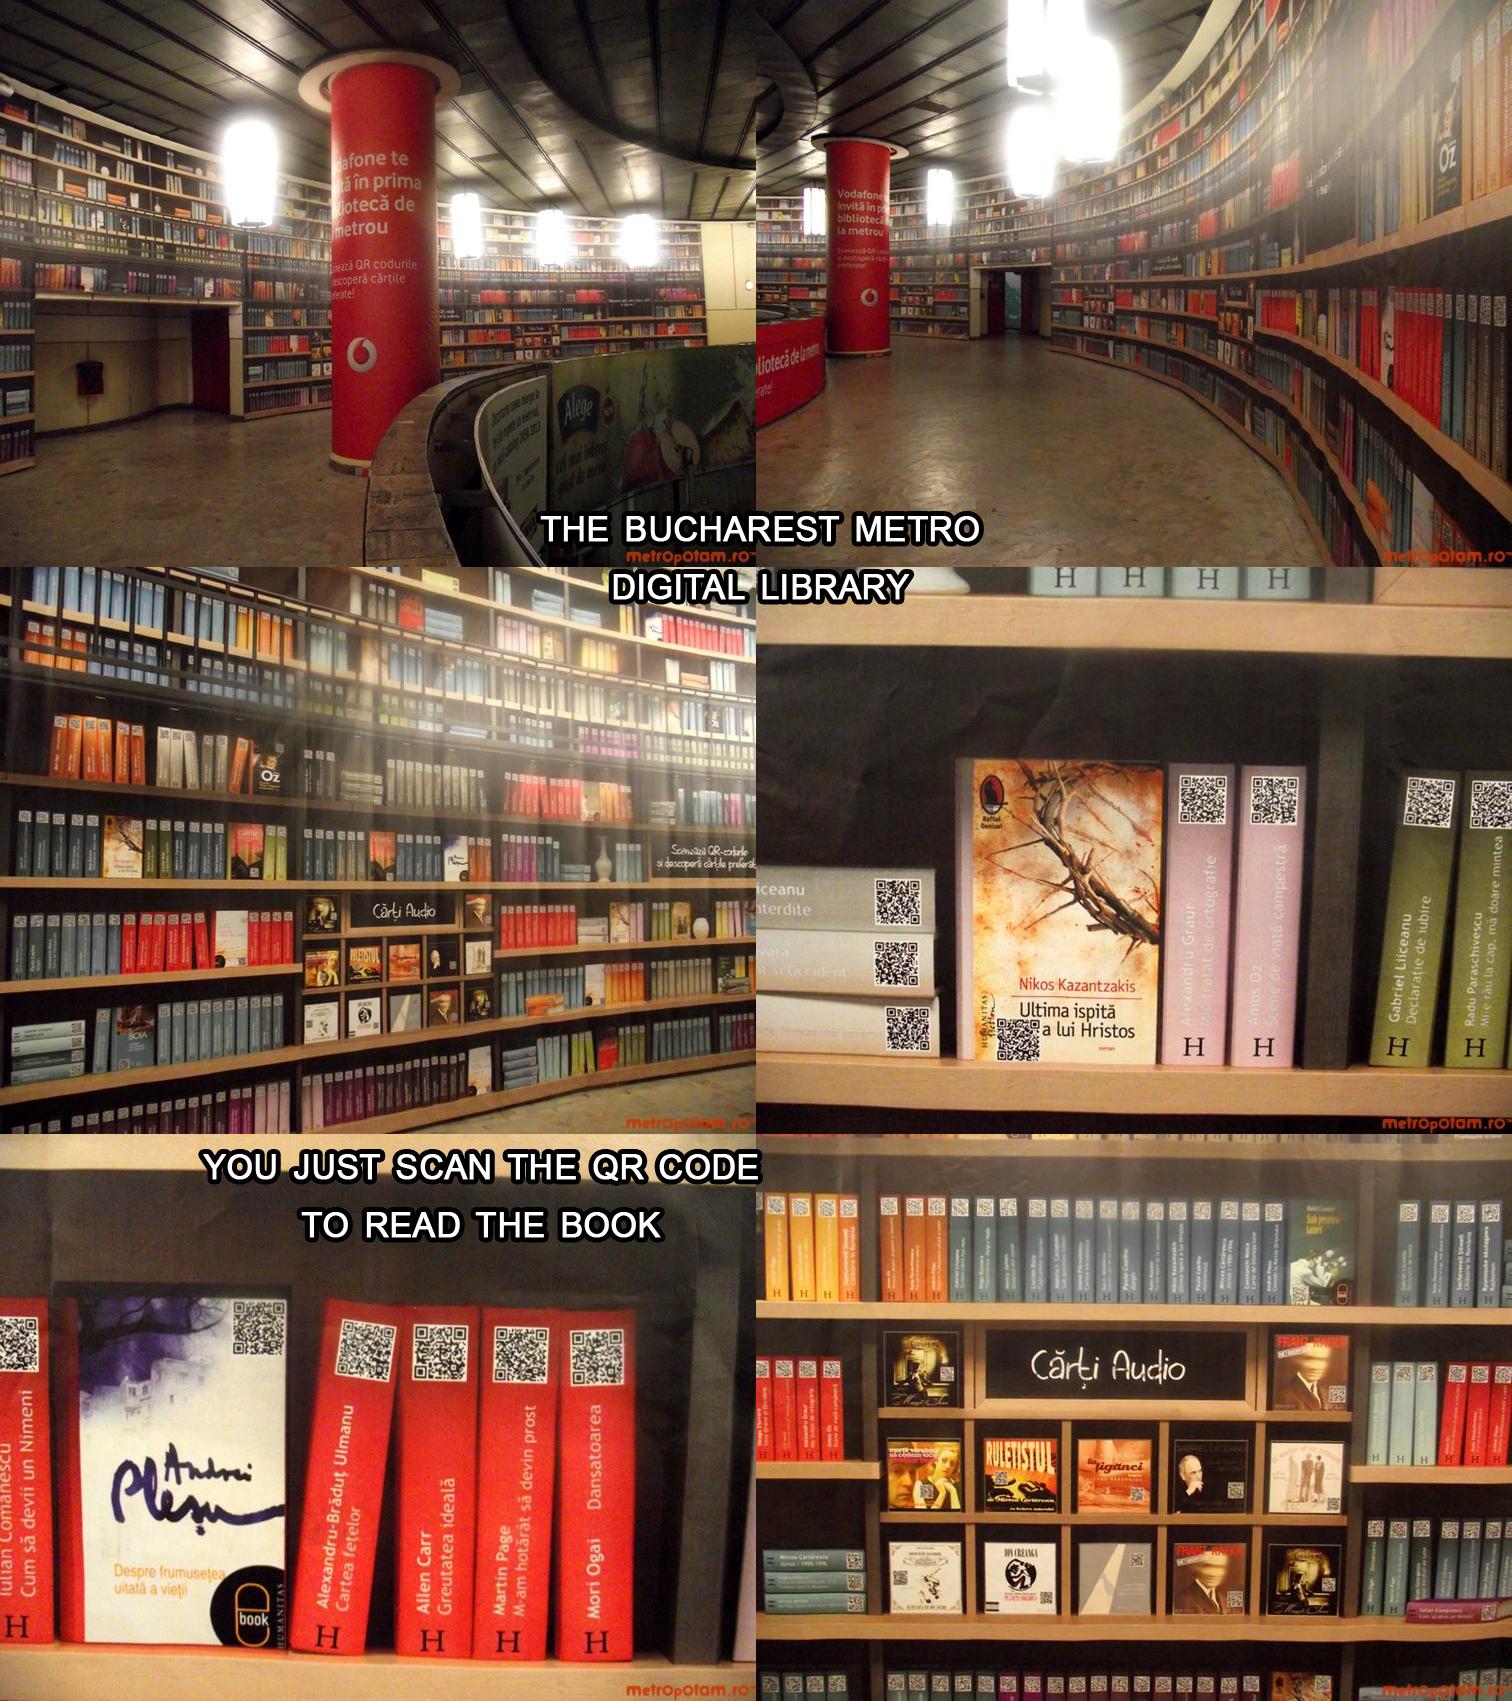 Digital library in Bucharest Metro station